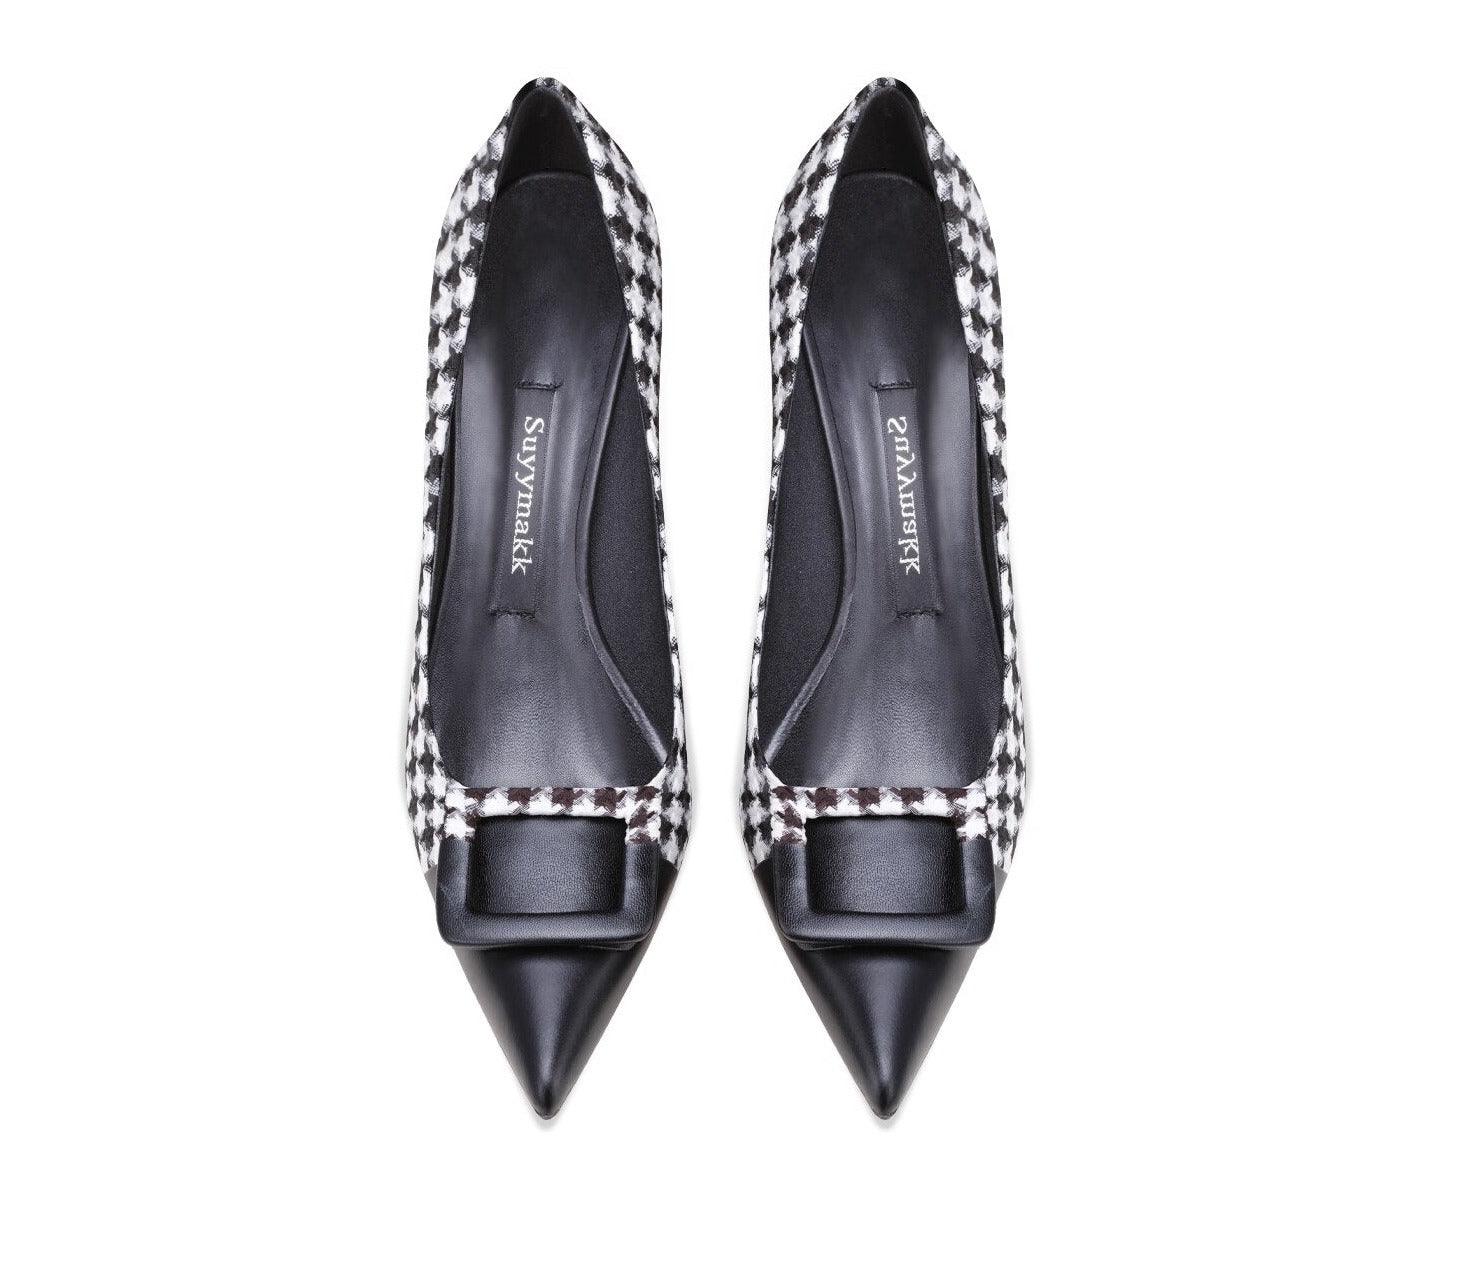 Women's Shoes - Heels Genuine Leather Star Design Women Pumps Luxury Pointed Toe...